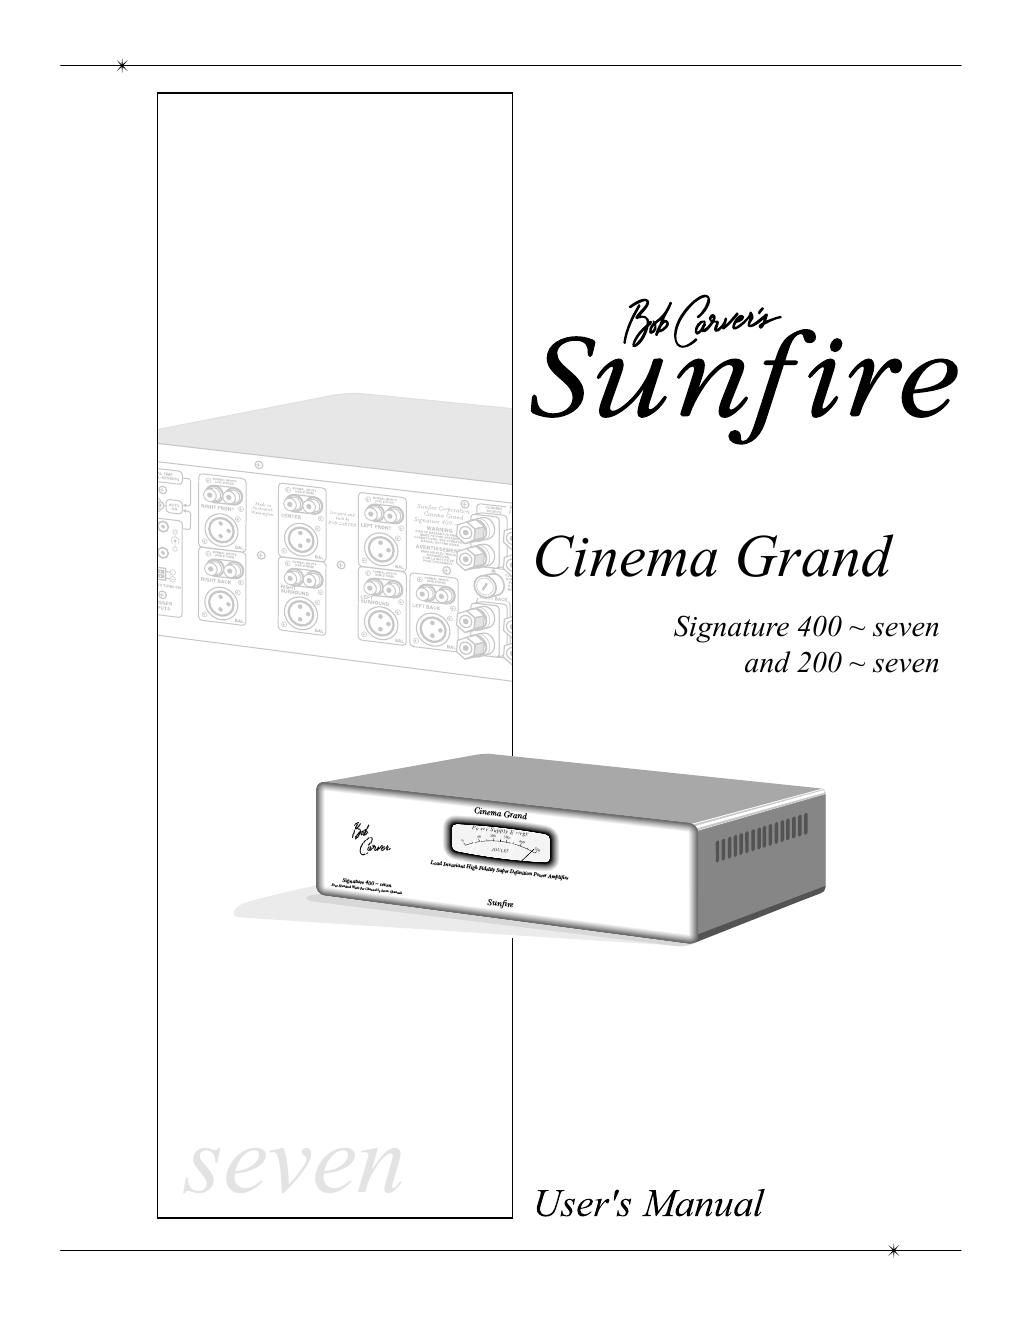 sunfire cinema grand signature 400 200 mk7 owners manual